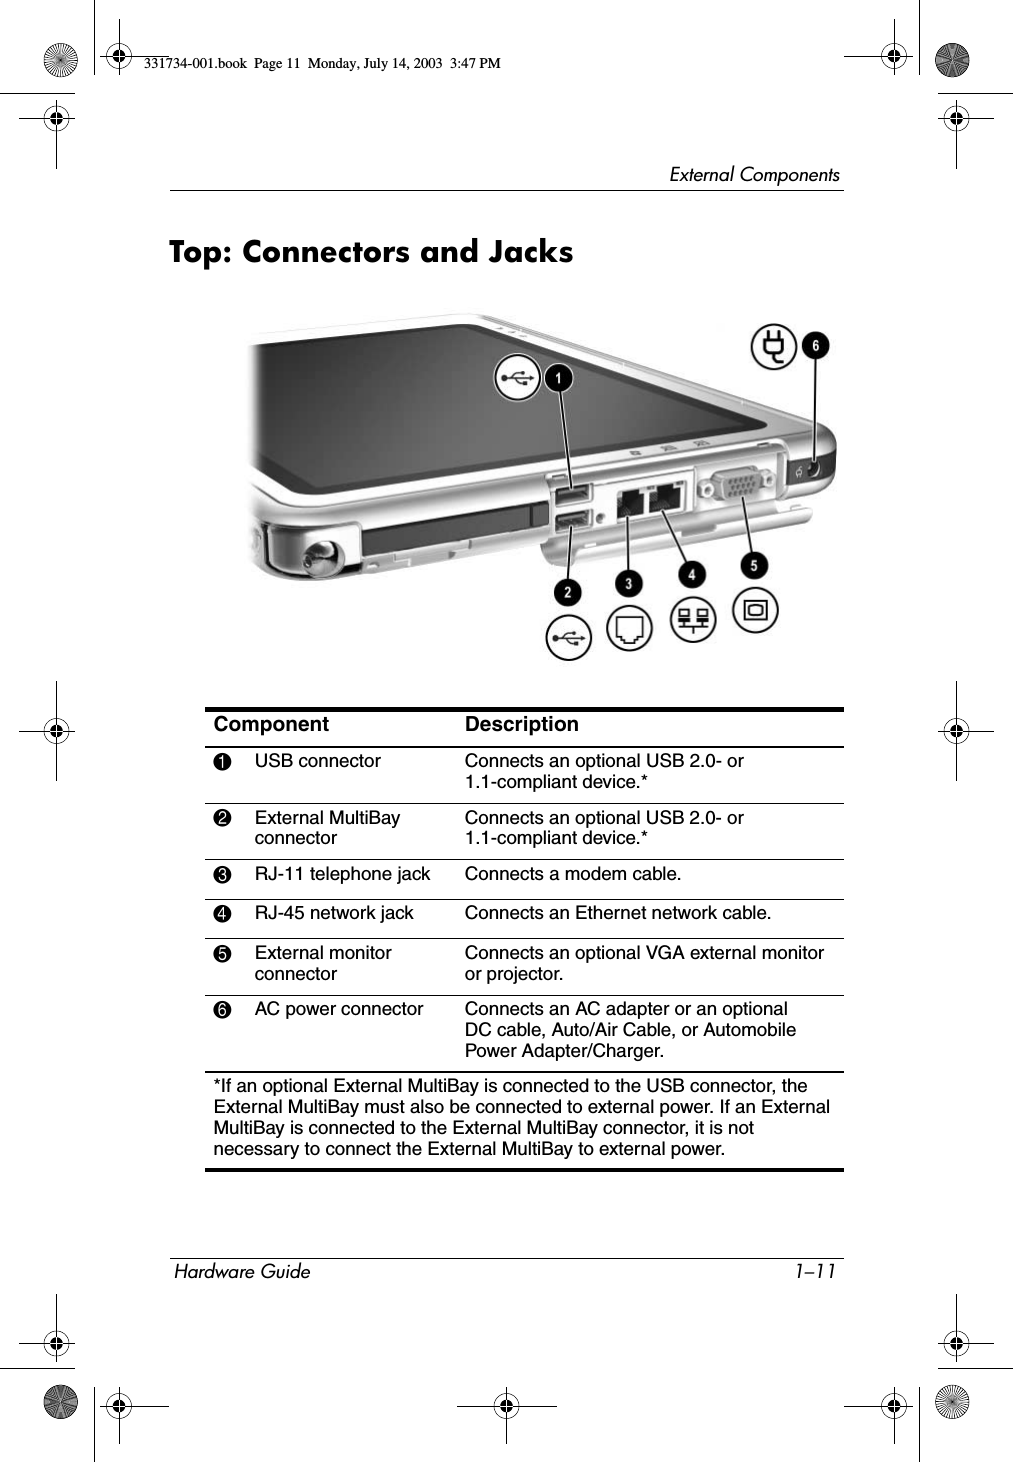 External ComponentsHardware Guide 1–11Top: Connectors and JacksComponent Description1USB connector Connects an optional USB 2.0- or 1.1-compliant device.*2External MultiBay connectorConnects an optional USB 2.0- or 1.1-compliant device.*3RJ-11 telephone jack Connects a modem cable. 4RJ-45 network jack Connects an Ethernet network cable.5External monitor connectorConnects an optional VGA external monitor or projector.6AC power connector Connects an AC adapter or an optional DC cable, Auto/Air Cable, or Automobile Power Adapter/Charger.*If an optional External MultiBay is connected to the USB connector, the External MultiBay must also be connected to external power. If an External MultiBay is connected to the External MultiBay connector, it is not necessary to connect the External MultiBay to external power.331734-001.book  Page 11  Monday, July 14, 2003  3:47 PM